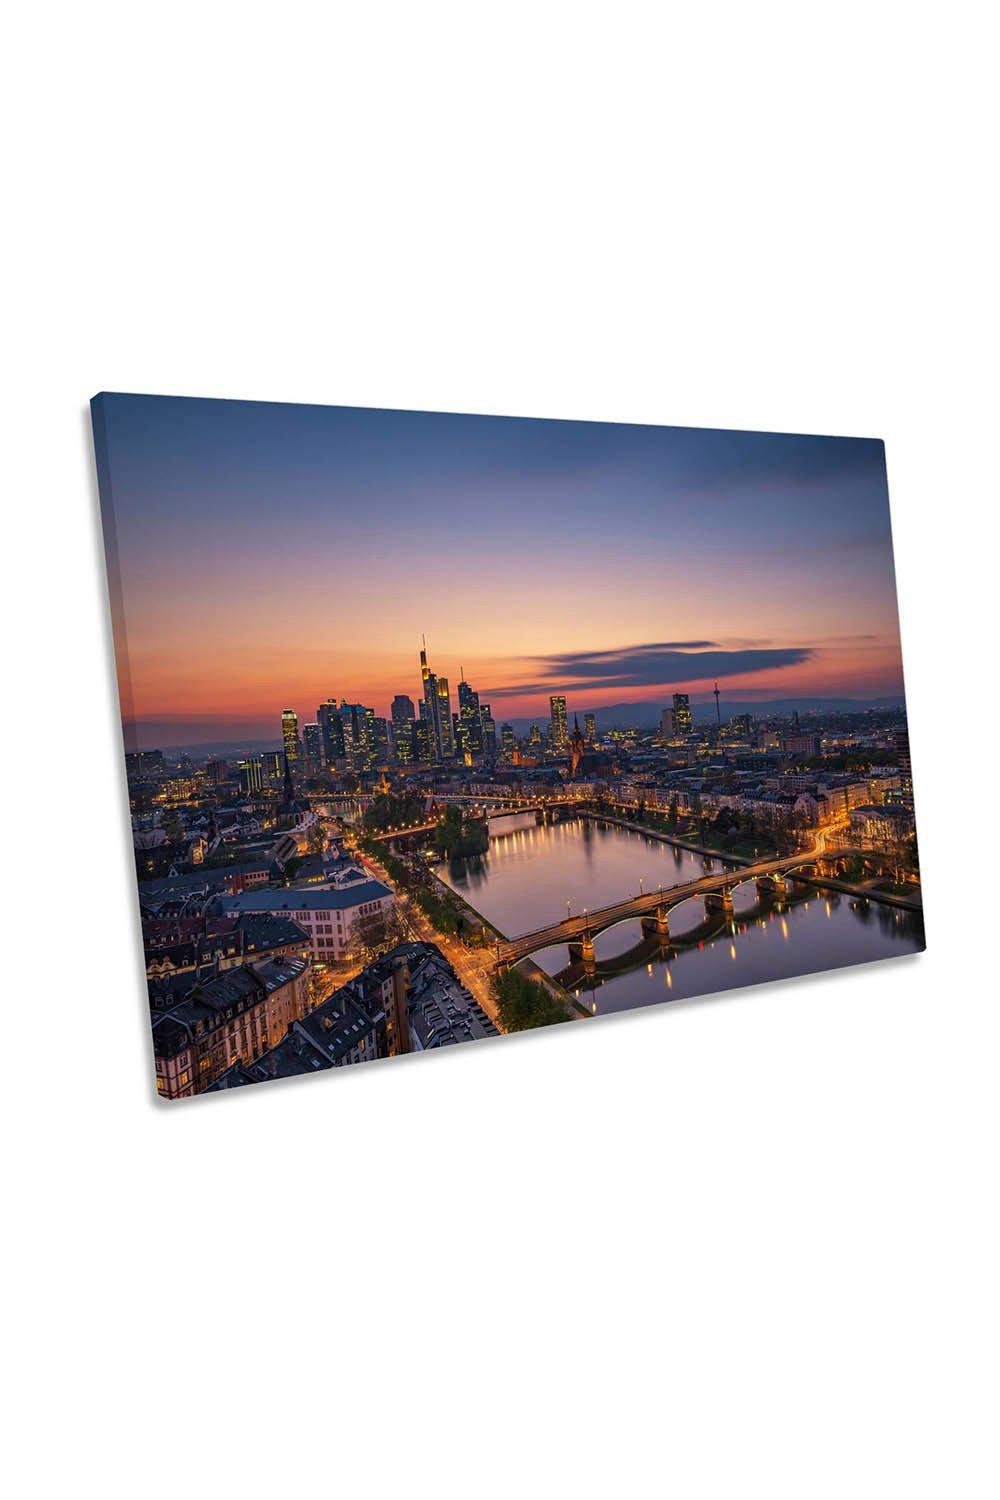 Frankfurt City Sunset Skyline Canvas Wall Art Picture Print